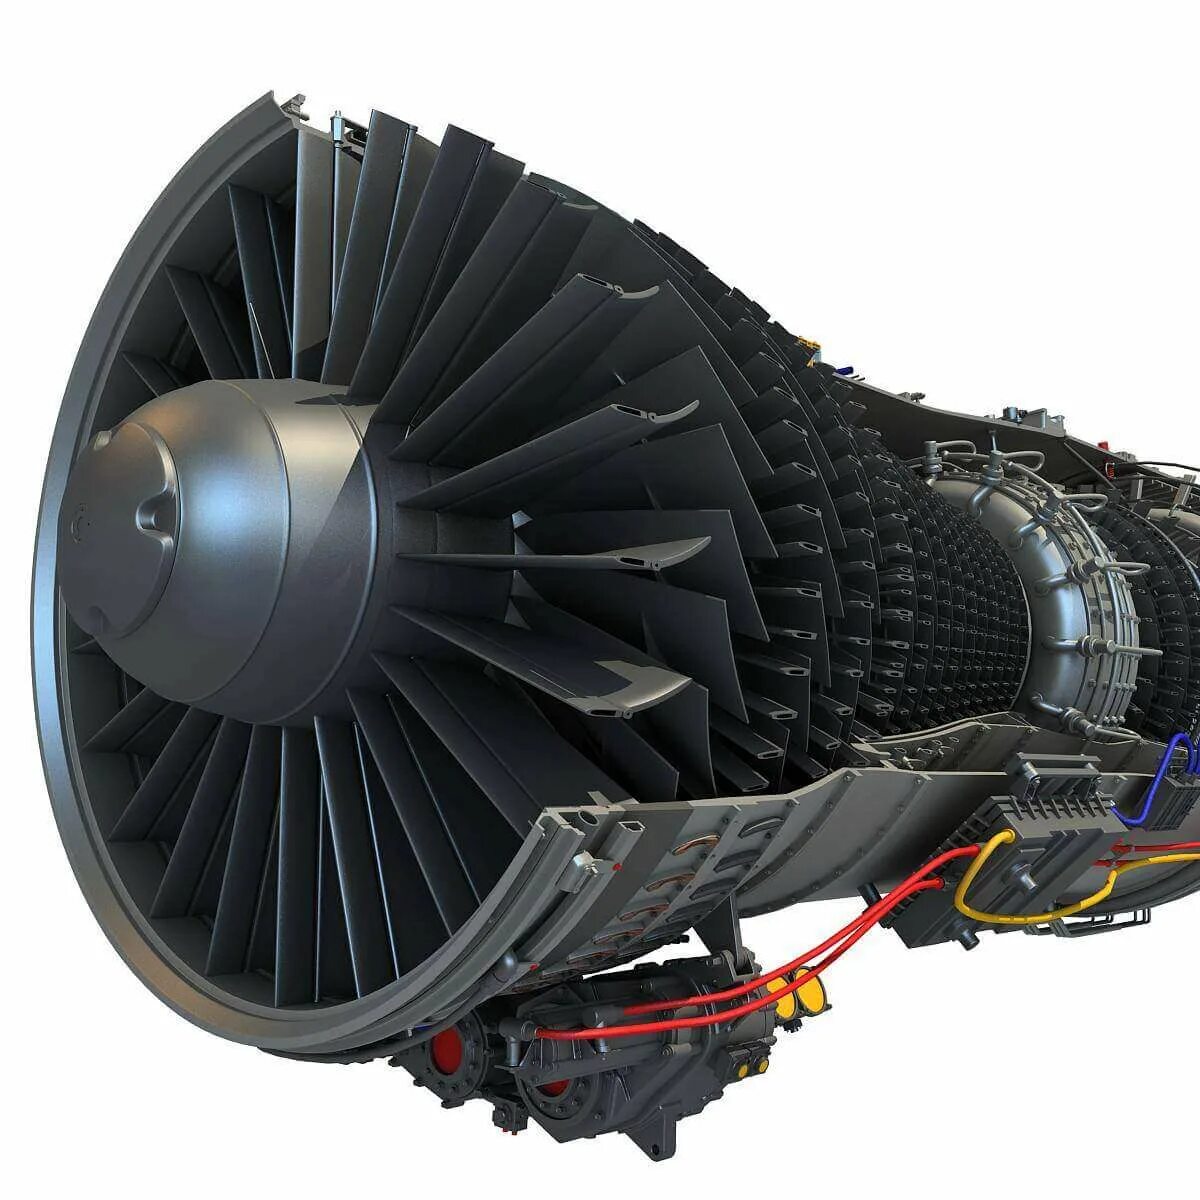 Мотор истребителя. Jet engine Cutaway. Jet turbofan. F100 engine. Afterburning turbofan.